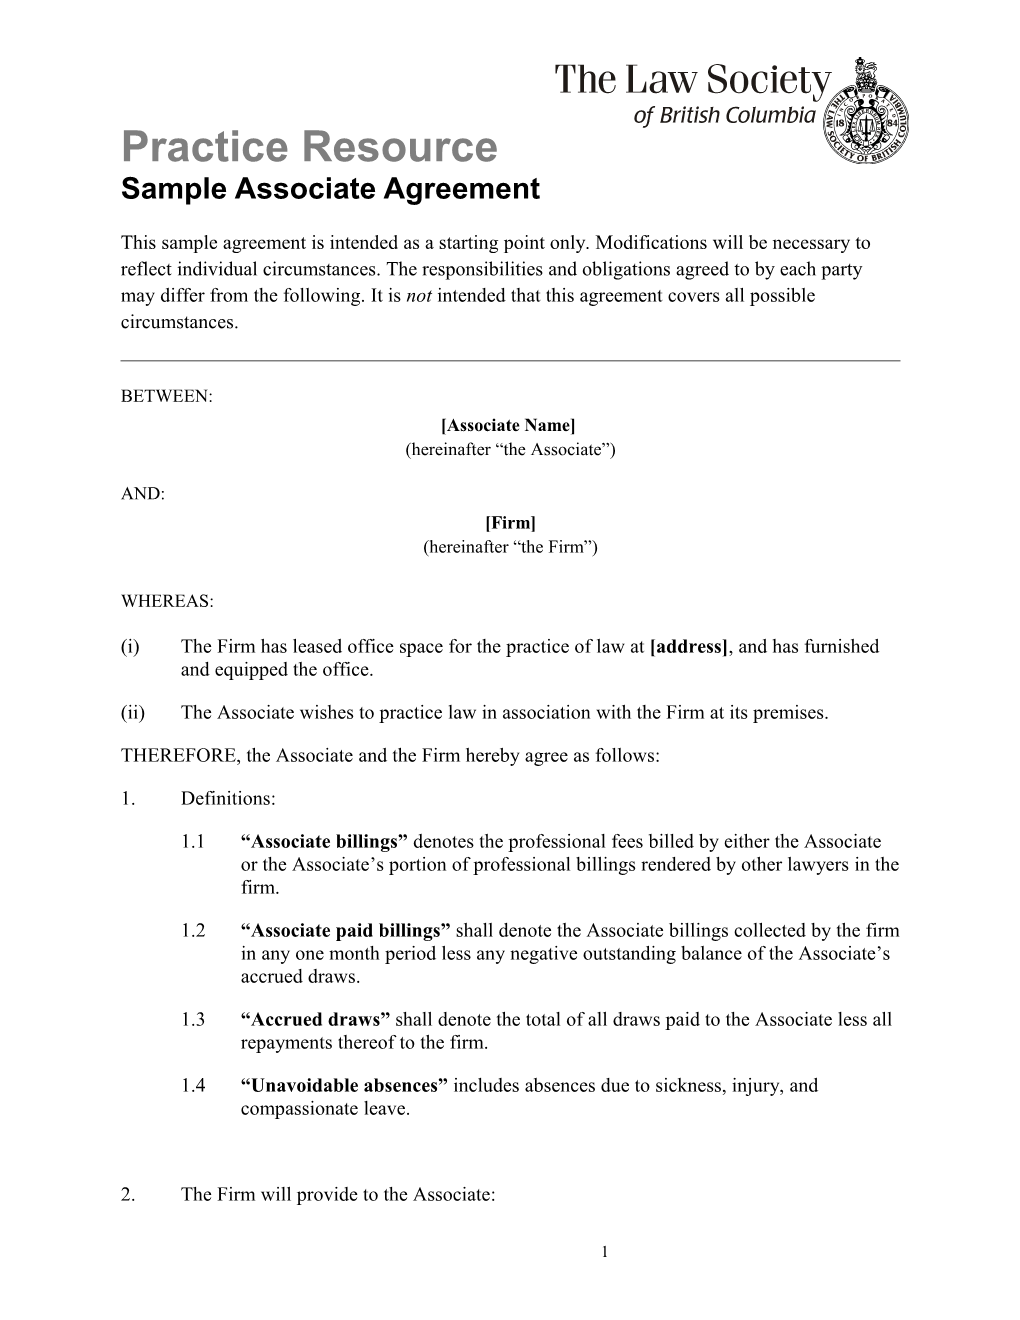 Practice Resource: Sample Associate Agreement